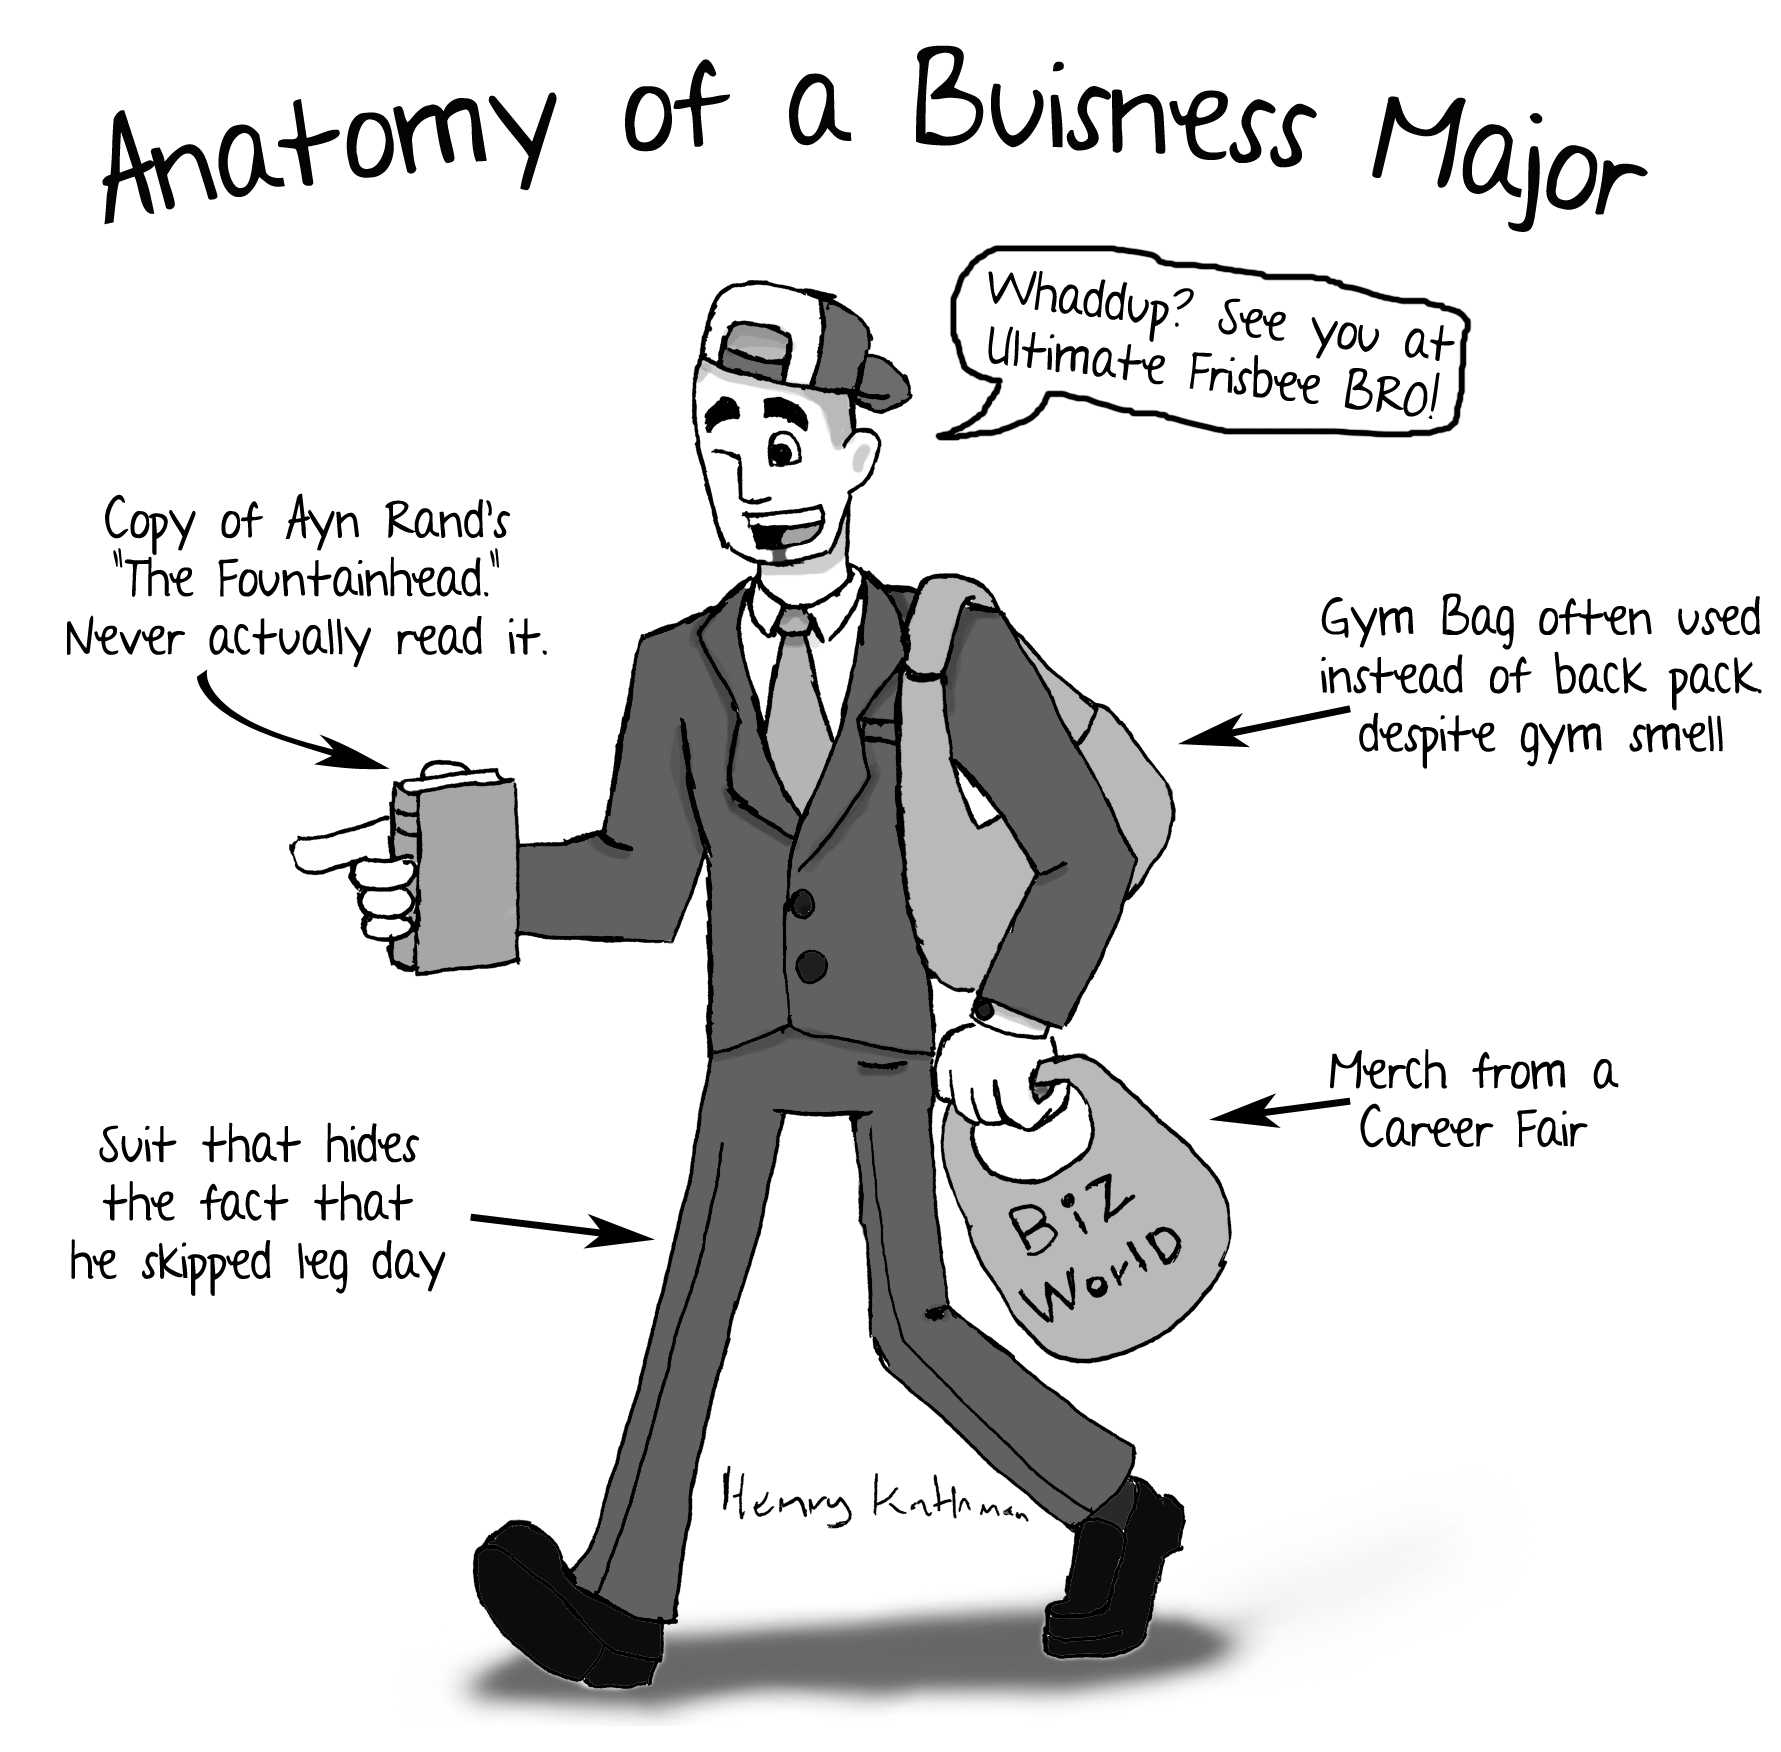 Anatomy of a Business Major